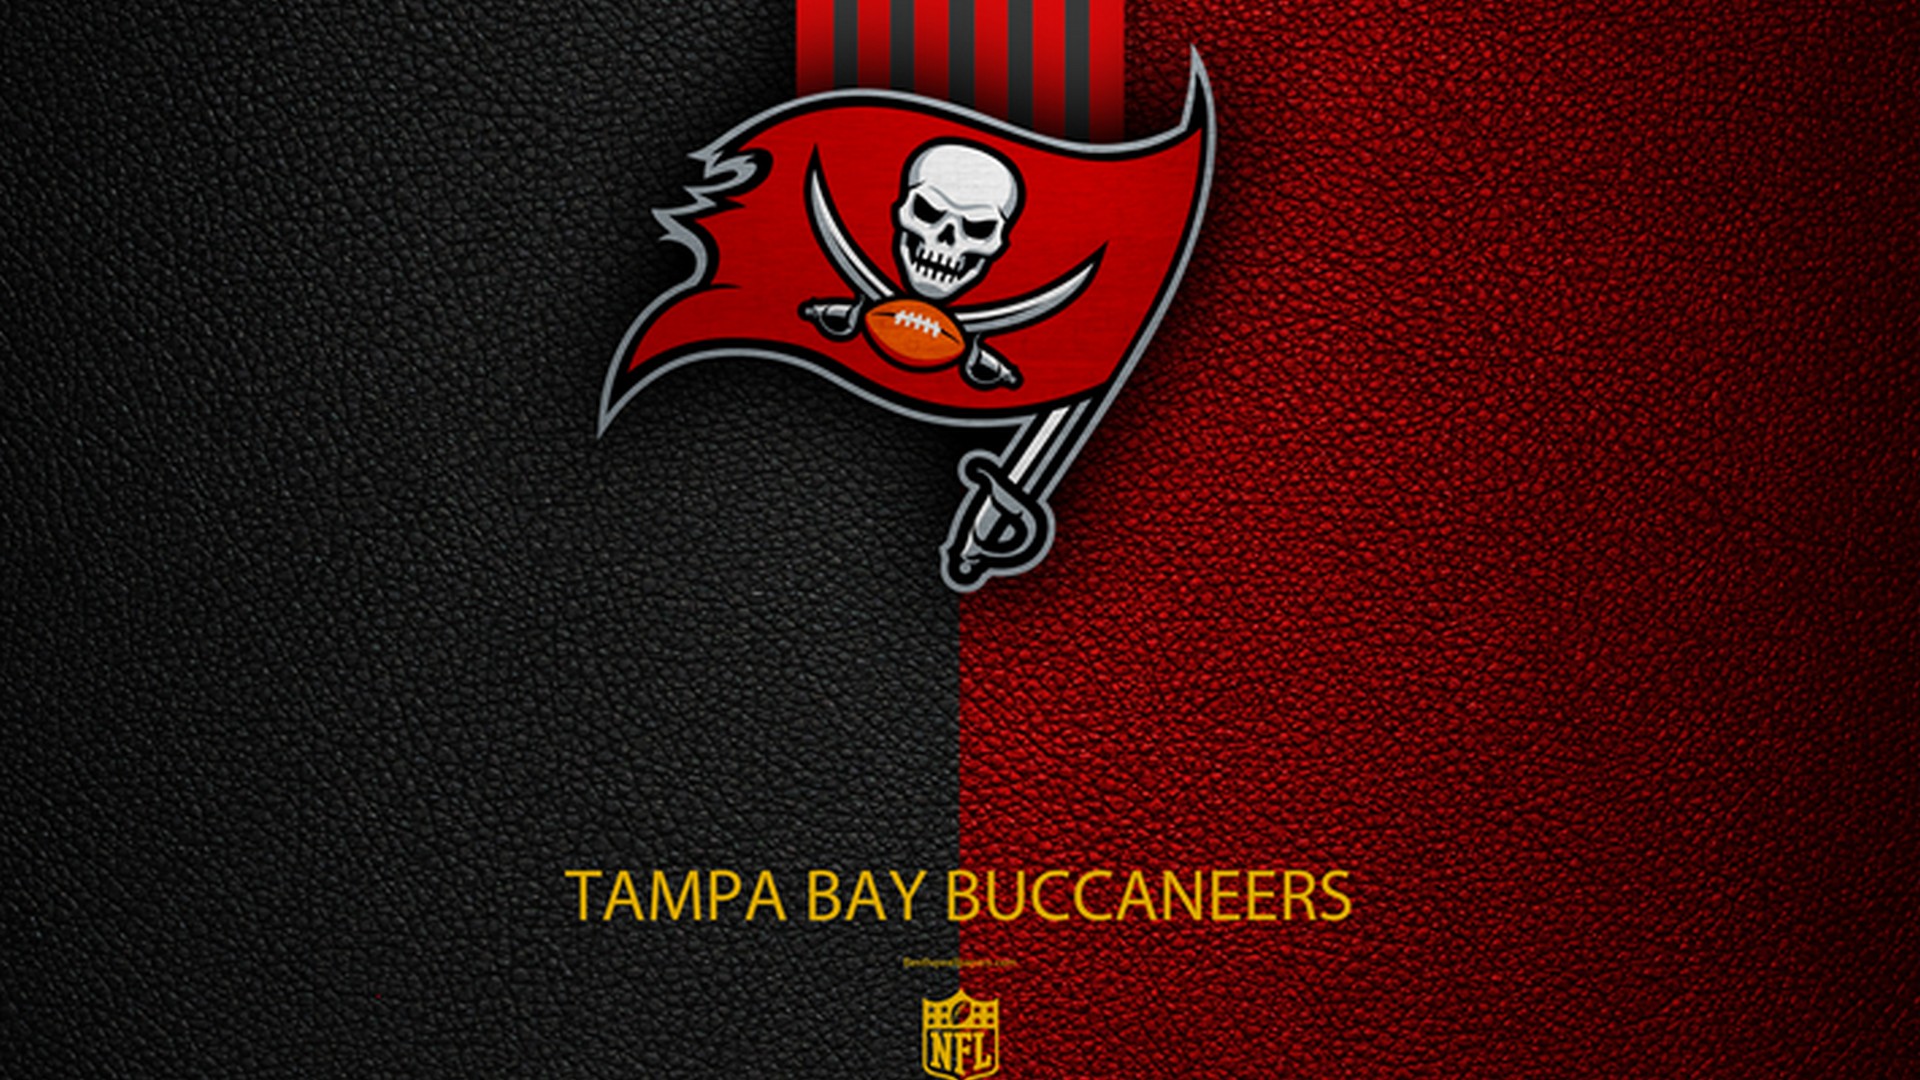 Tampa Bay Buccaneers Wallpaper For Mac